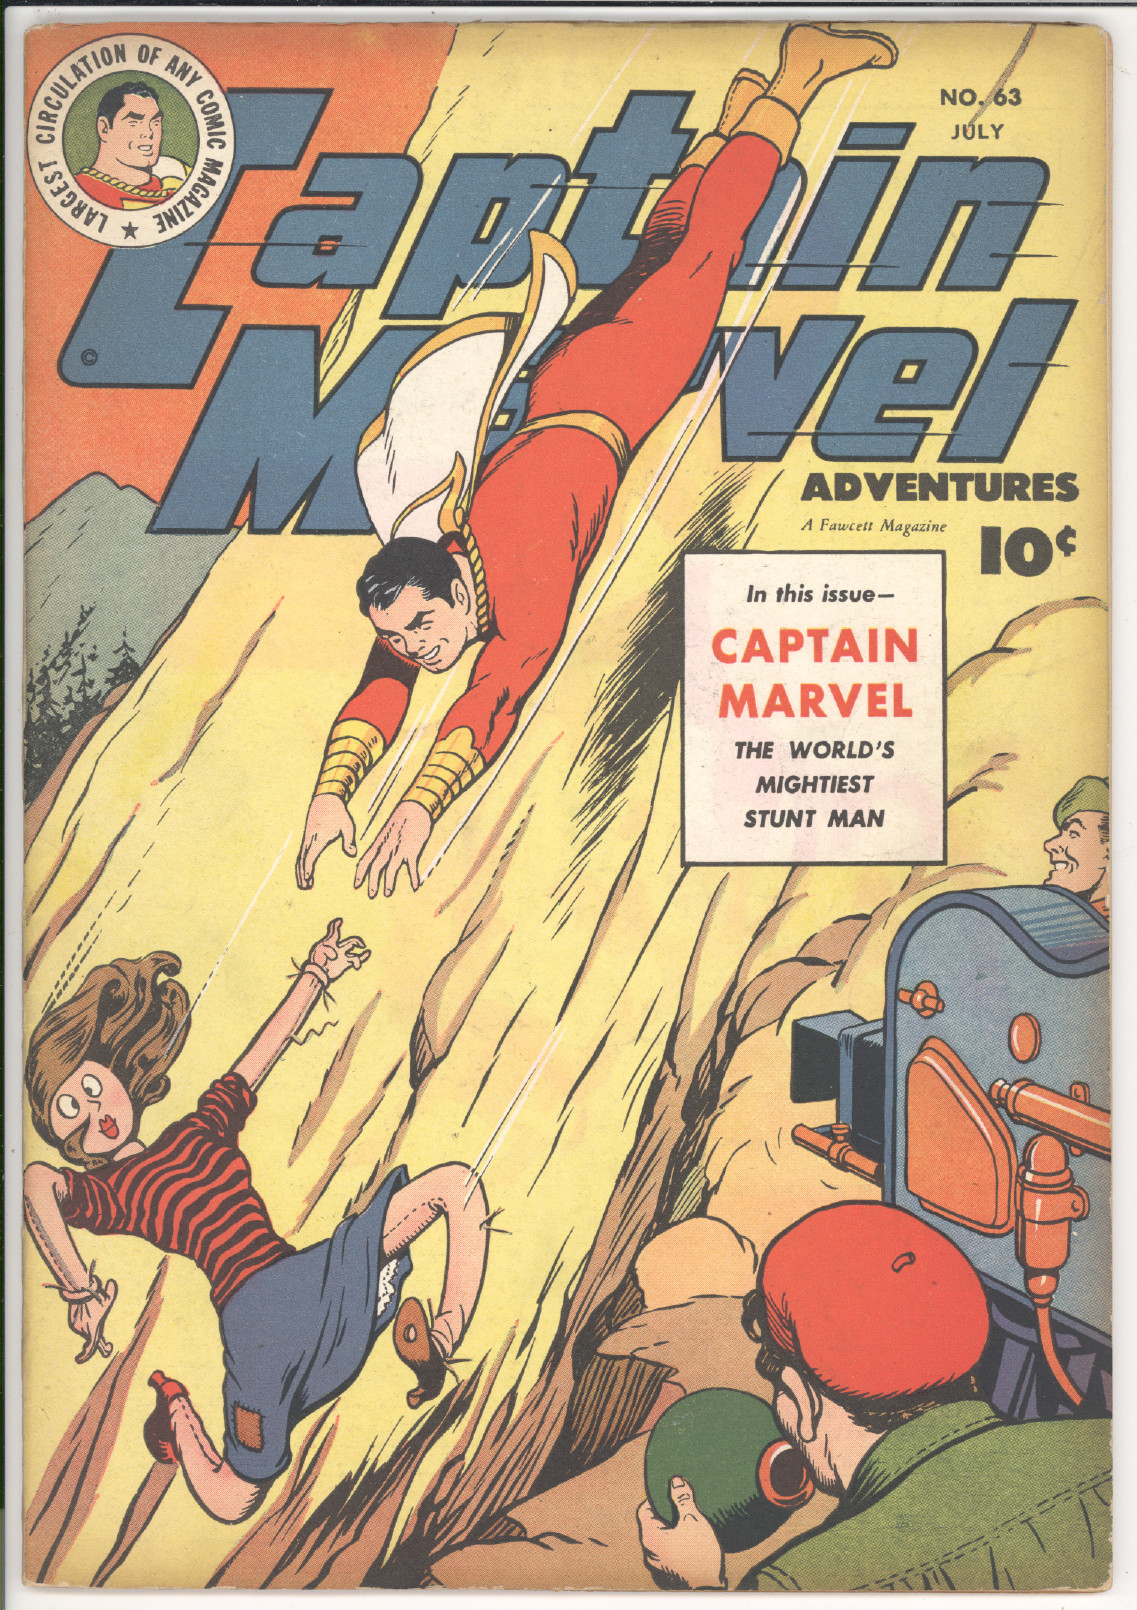 Captain Marvel Adventures #63 front